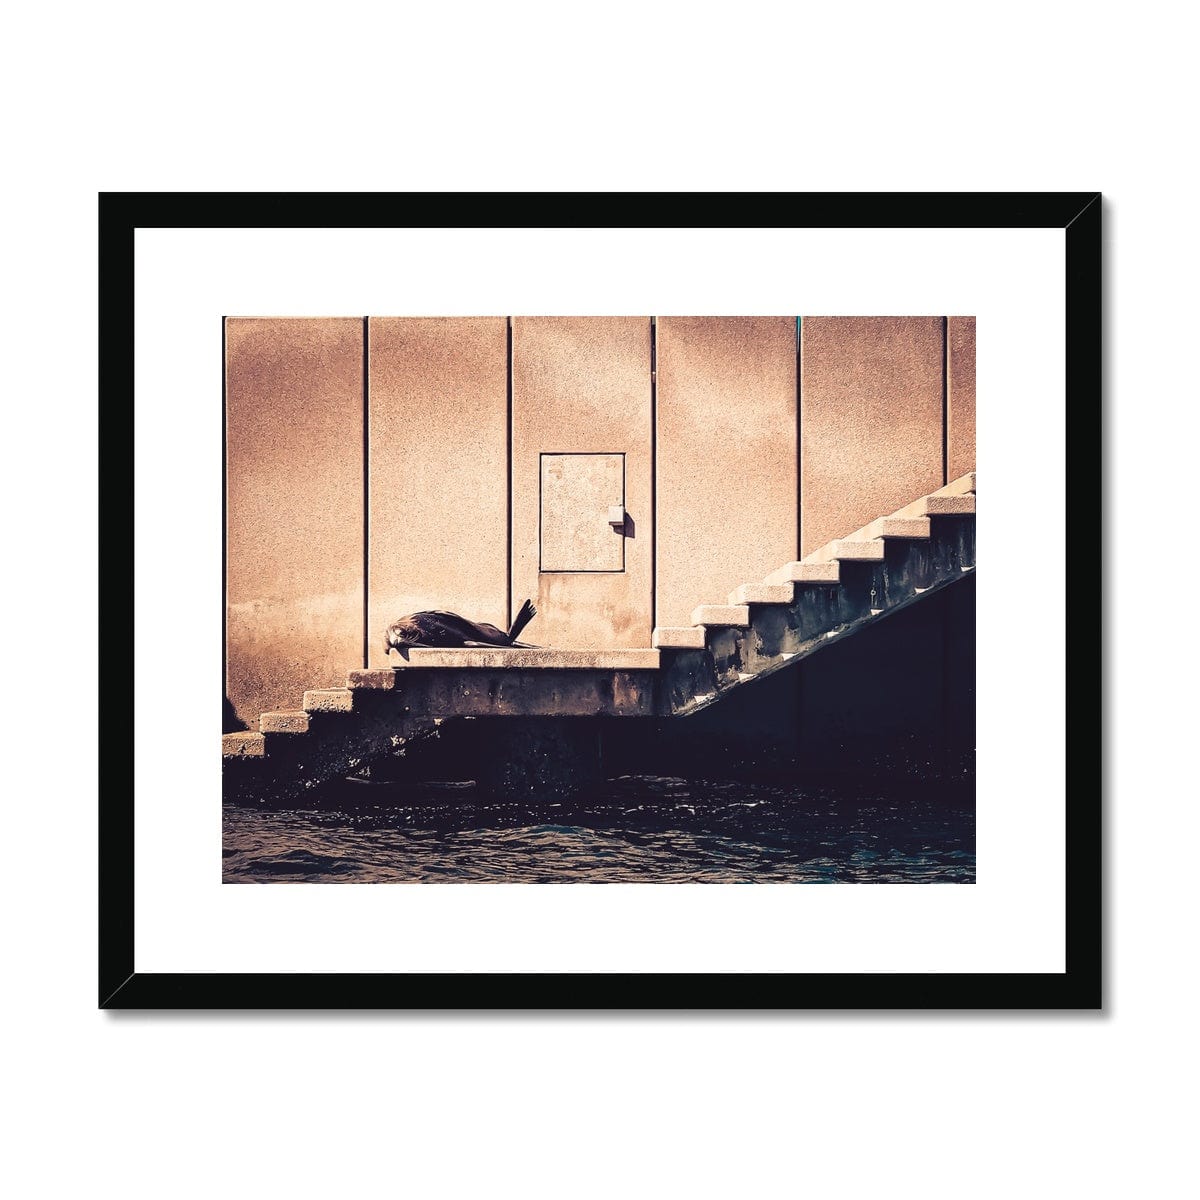 Adam Davies Framed A4 Landscape (29x21cm) / Black Frame Benny The Seal On The Opera House Steps Framed & Mounted Print